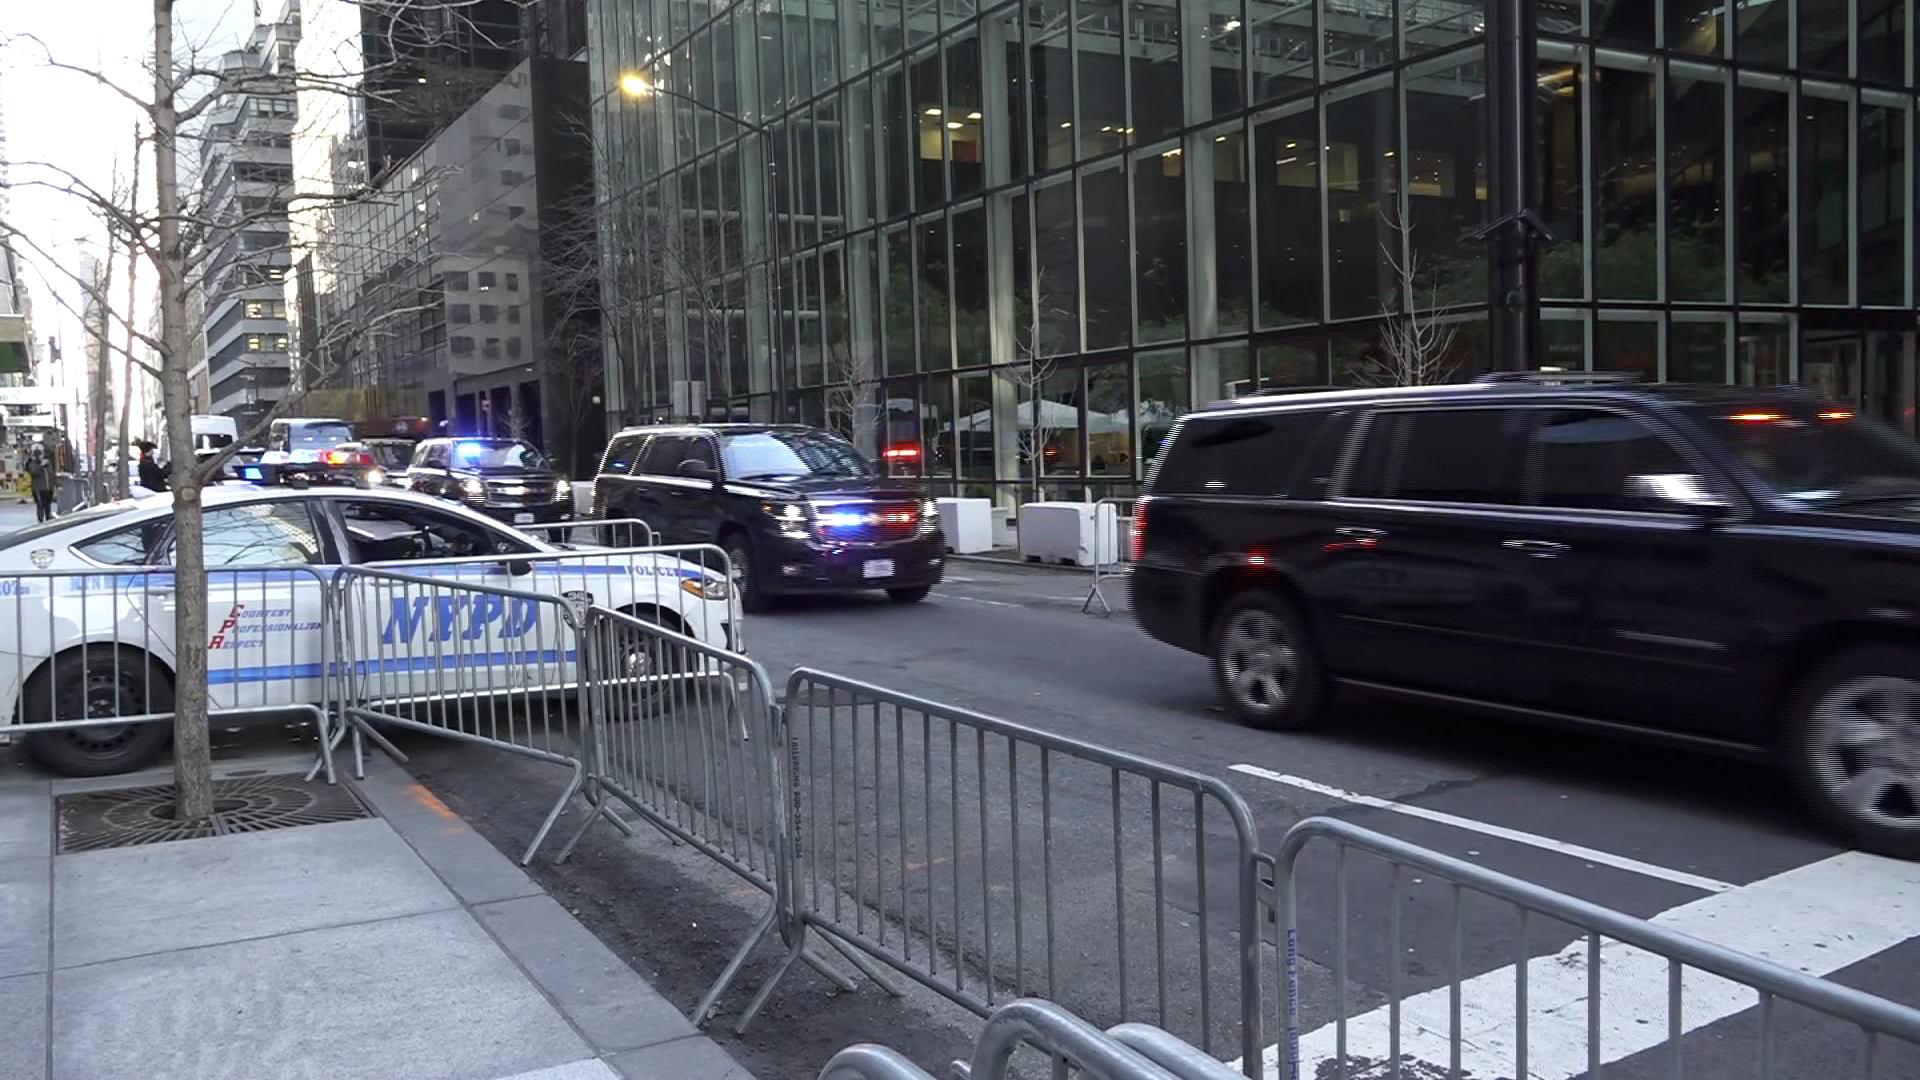 Donald Trump motorcade is seen in New York City on Thursday.